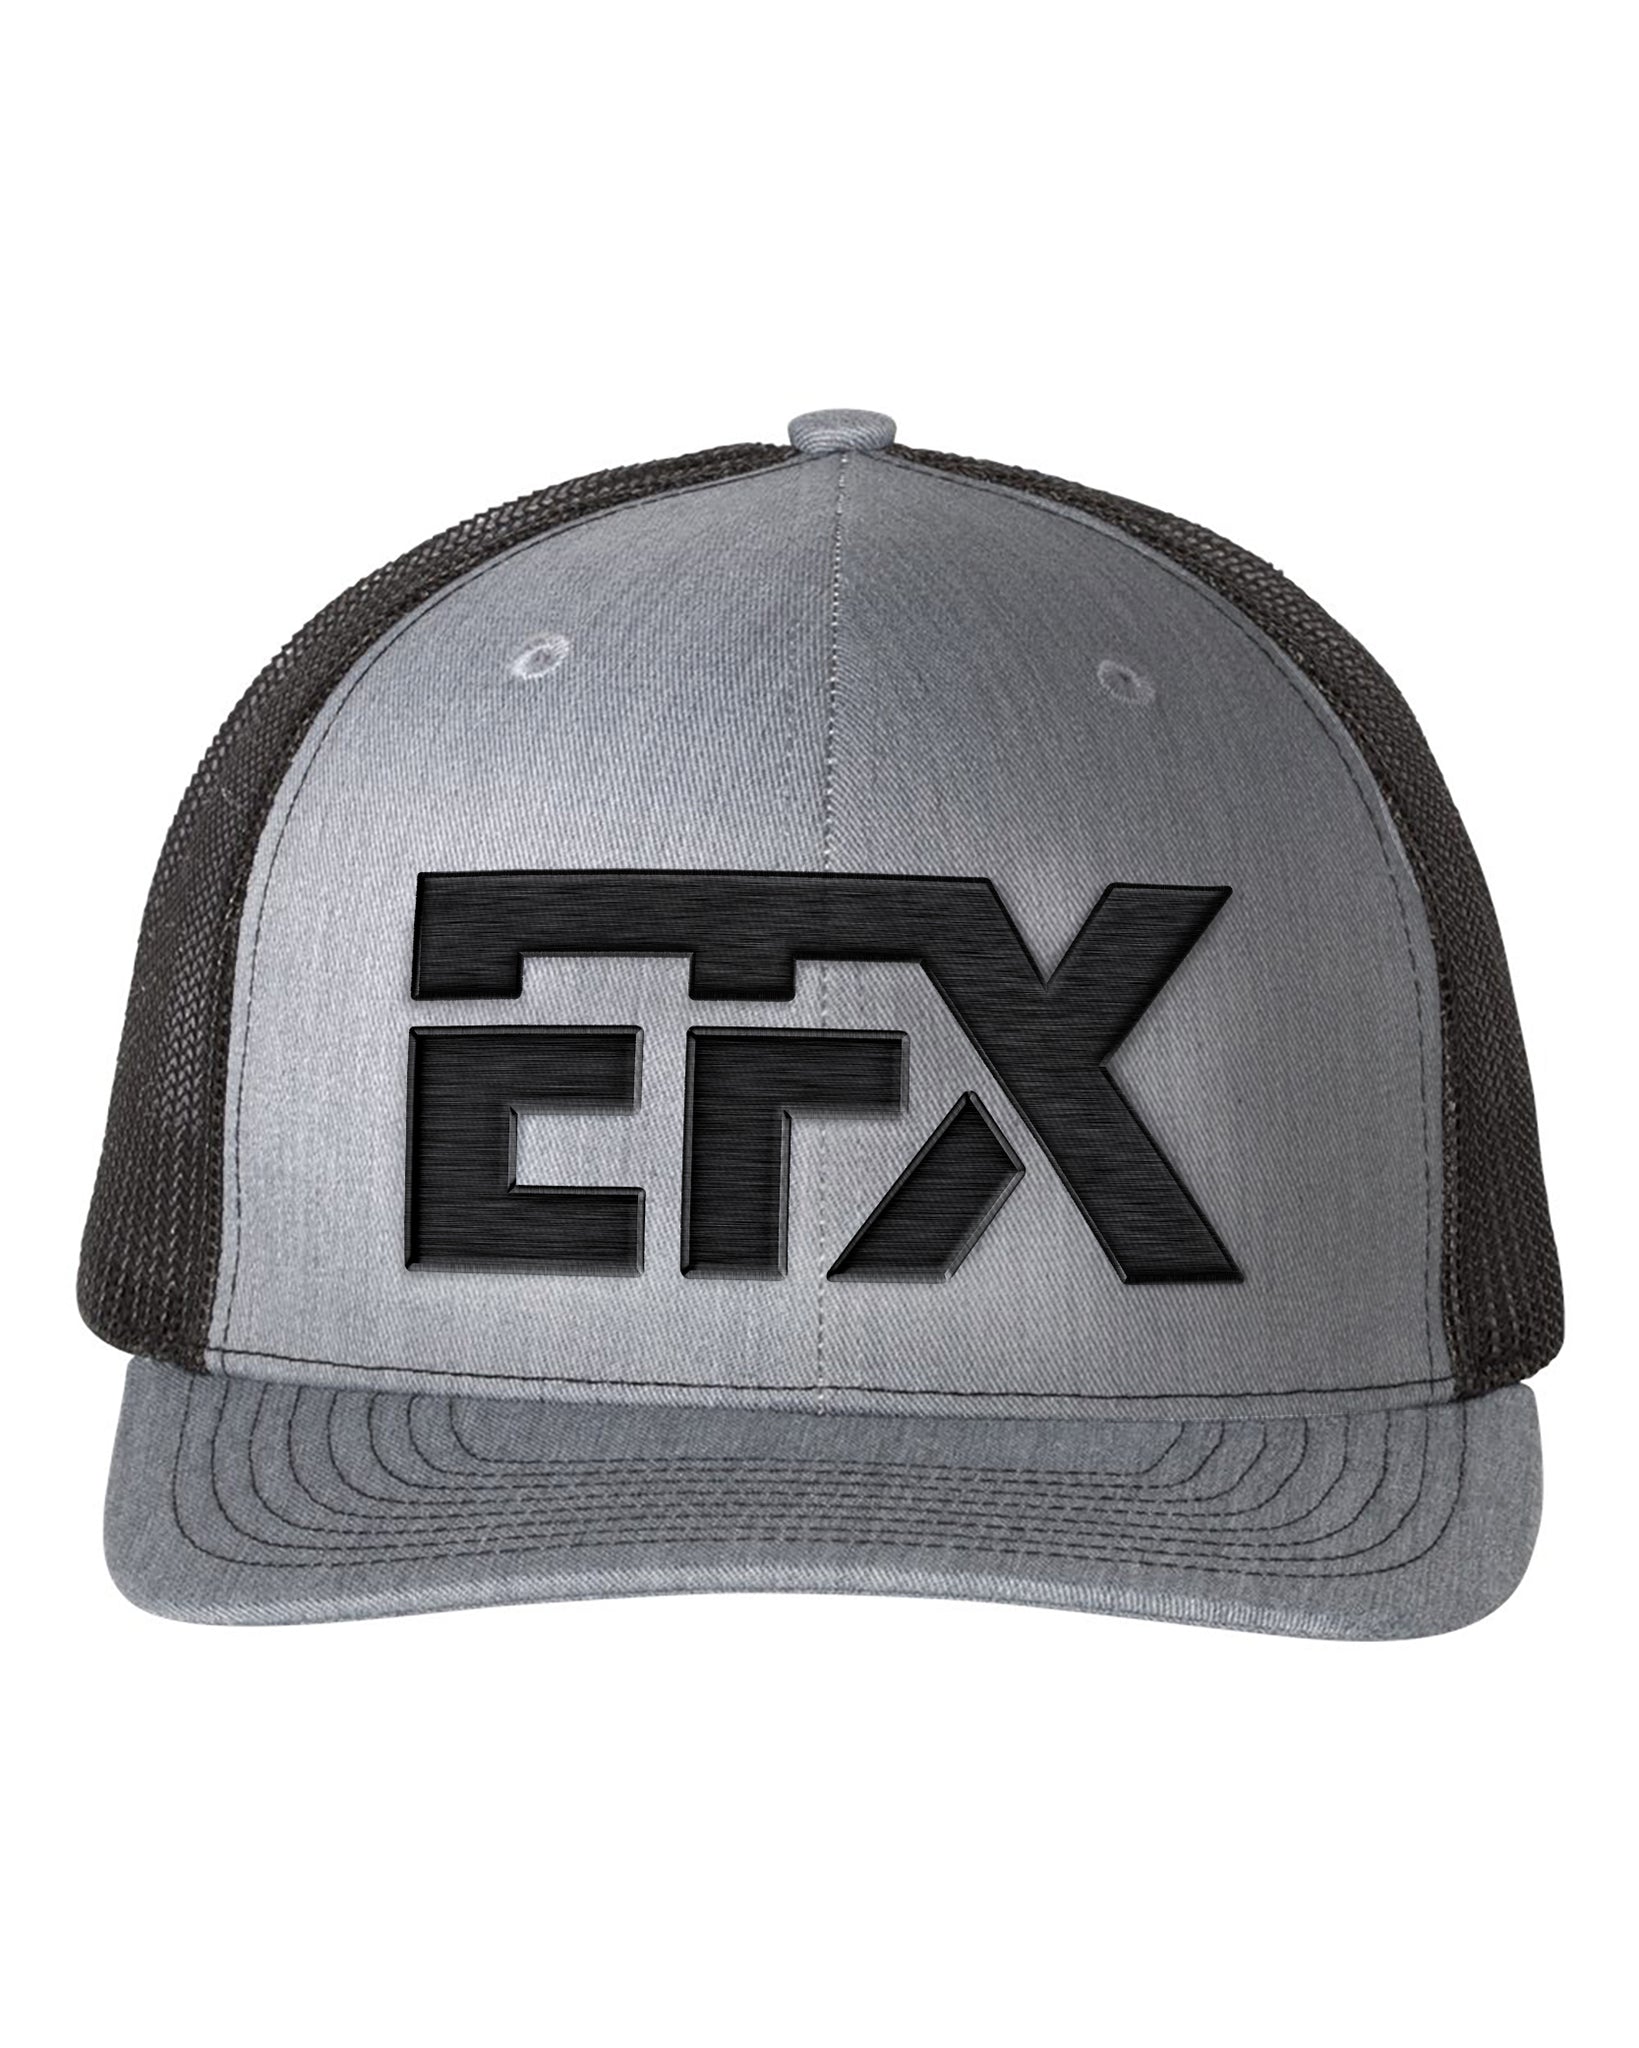 Logo-Short-Black on Black & Gray Hat